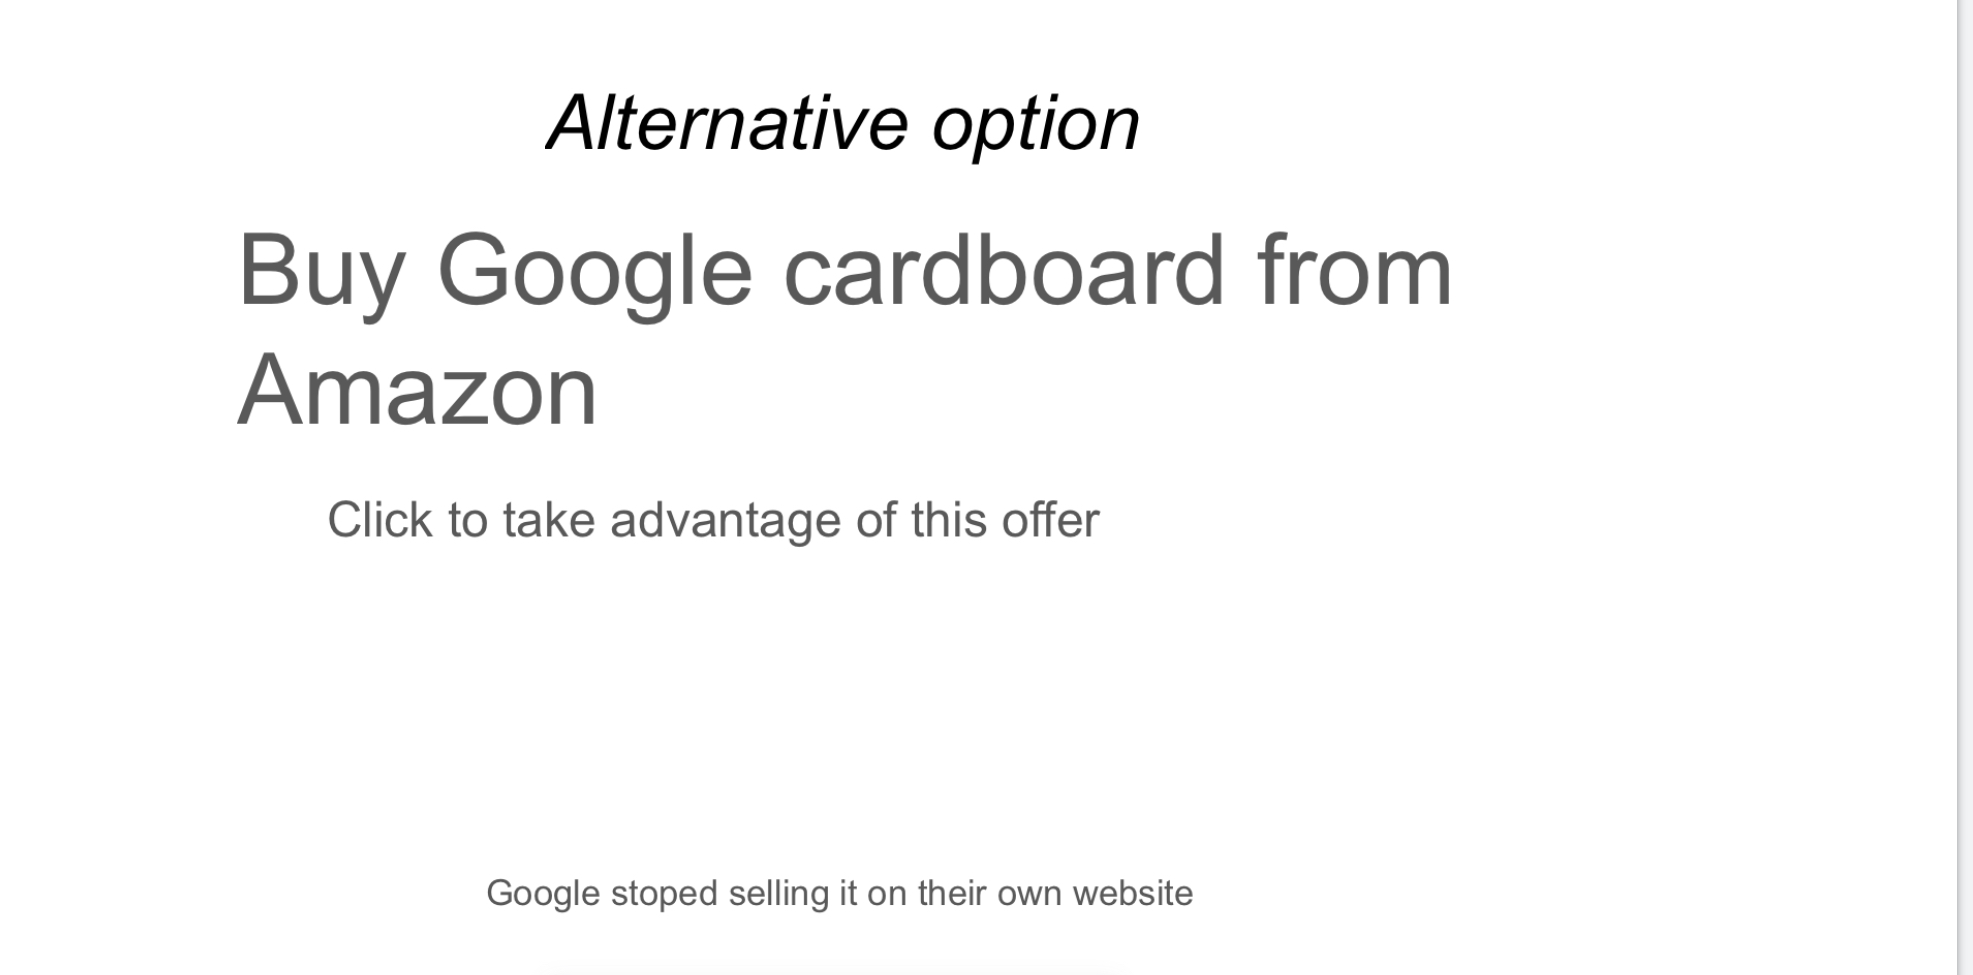 Buy Google cardboard from Amazon